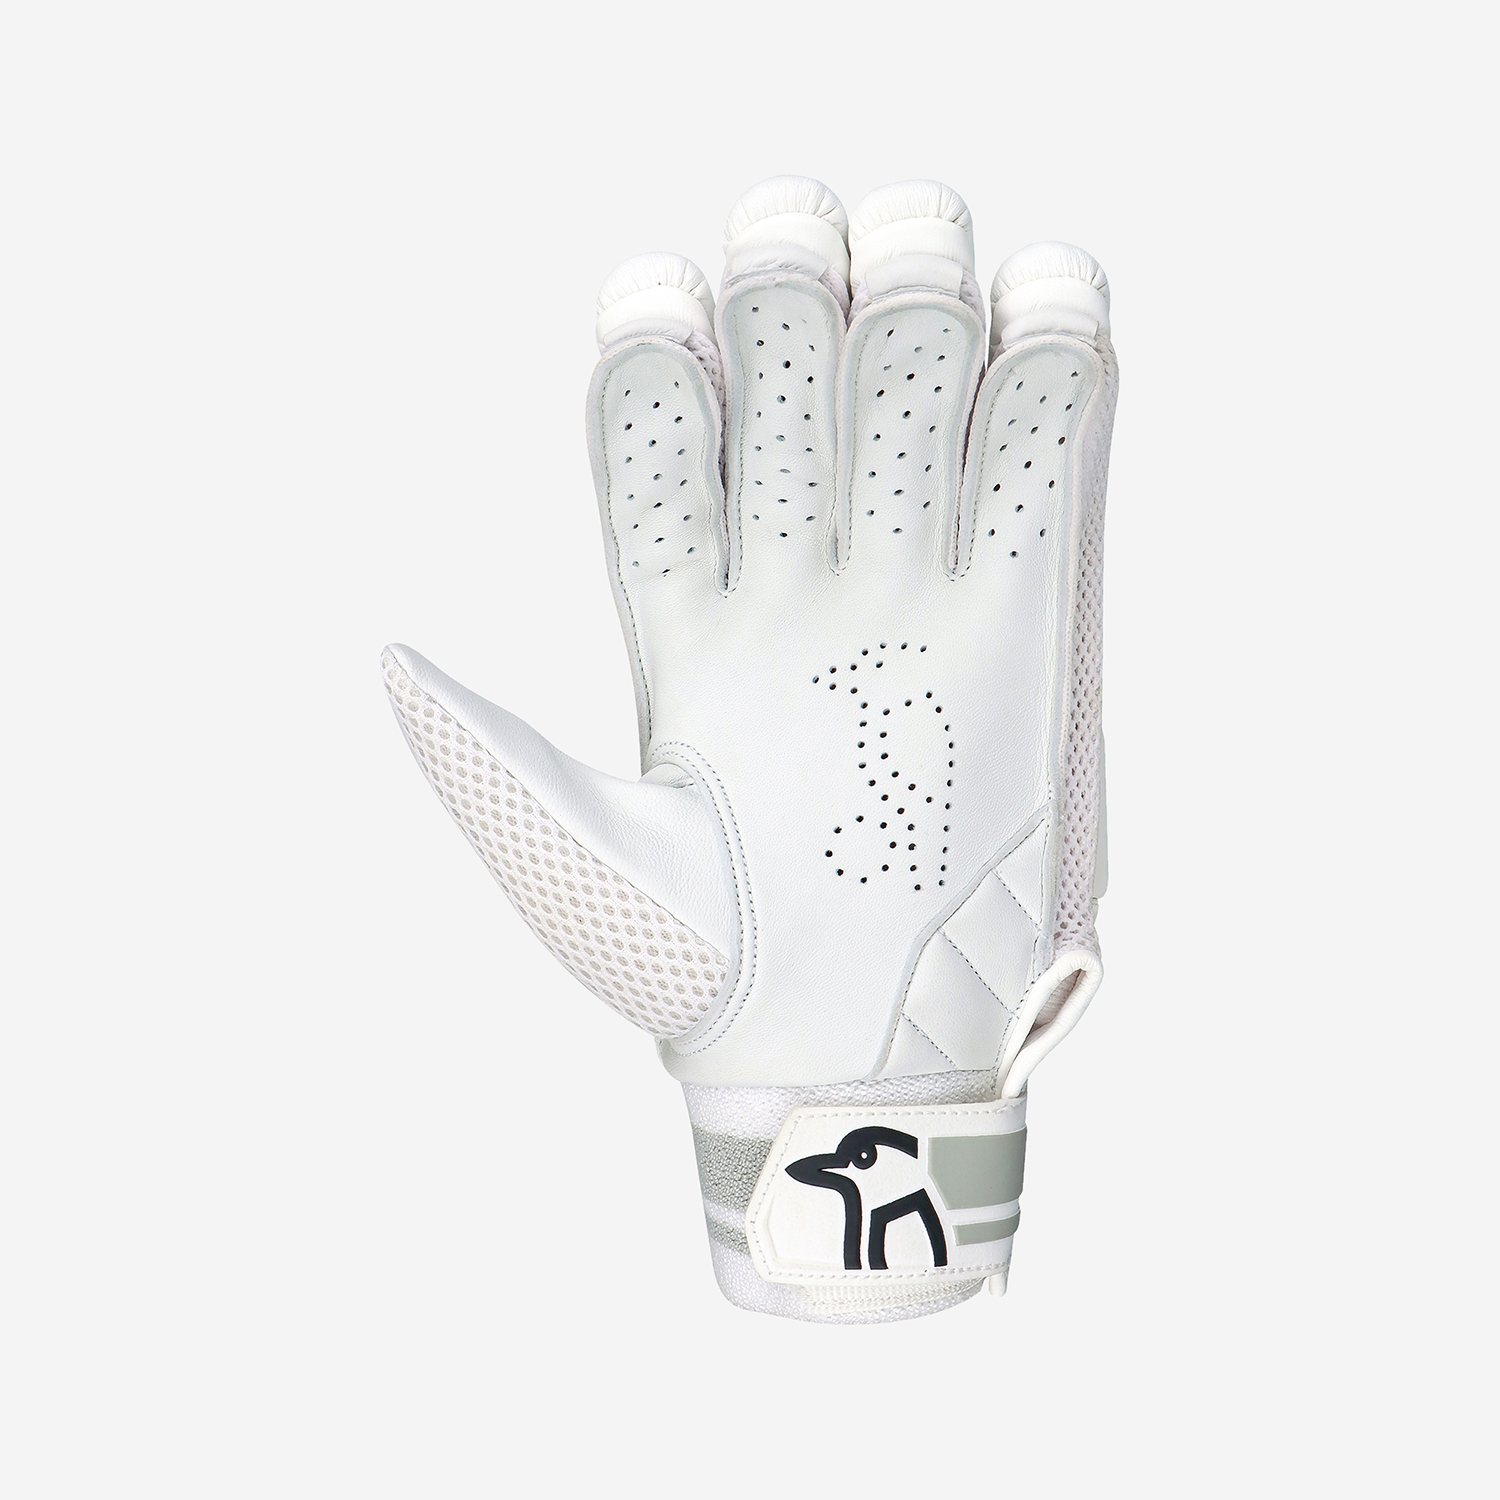 Pro 1.0 Ghost Batting Gloves